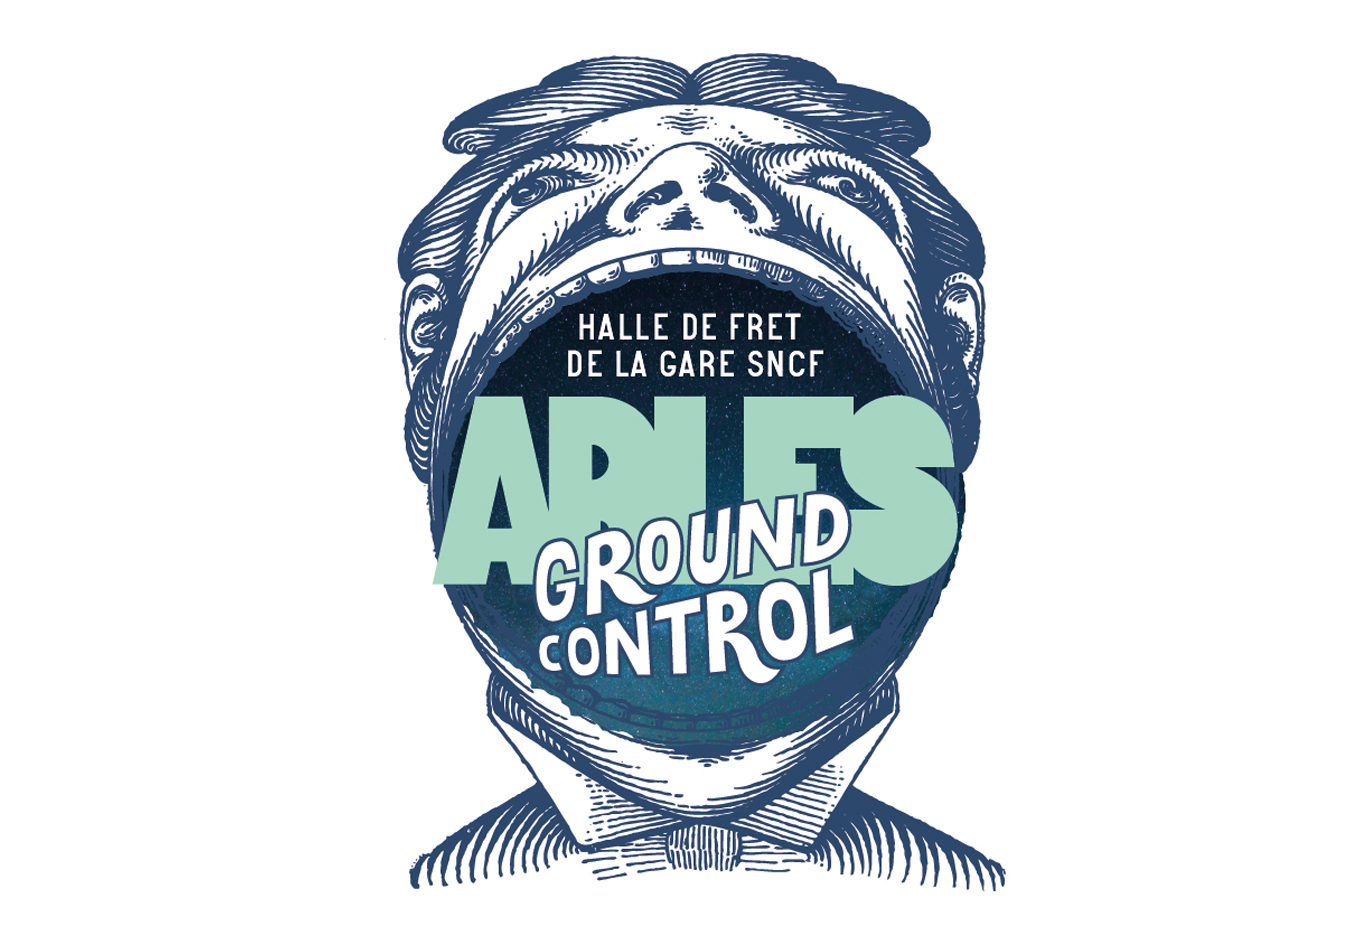 Ground Control Arles